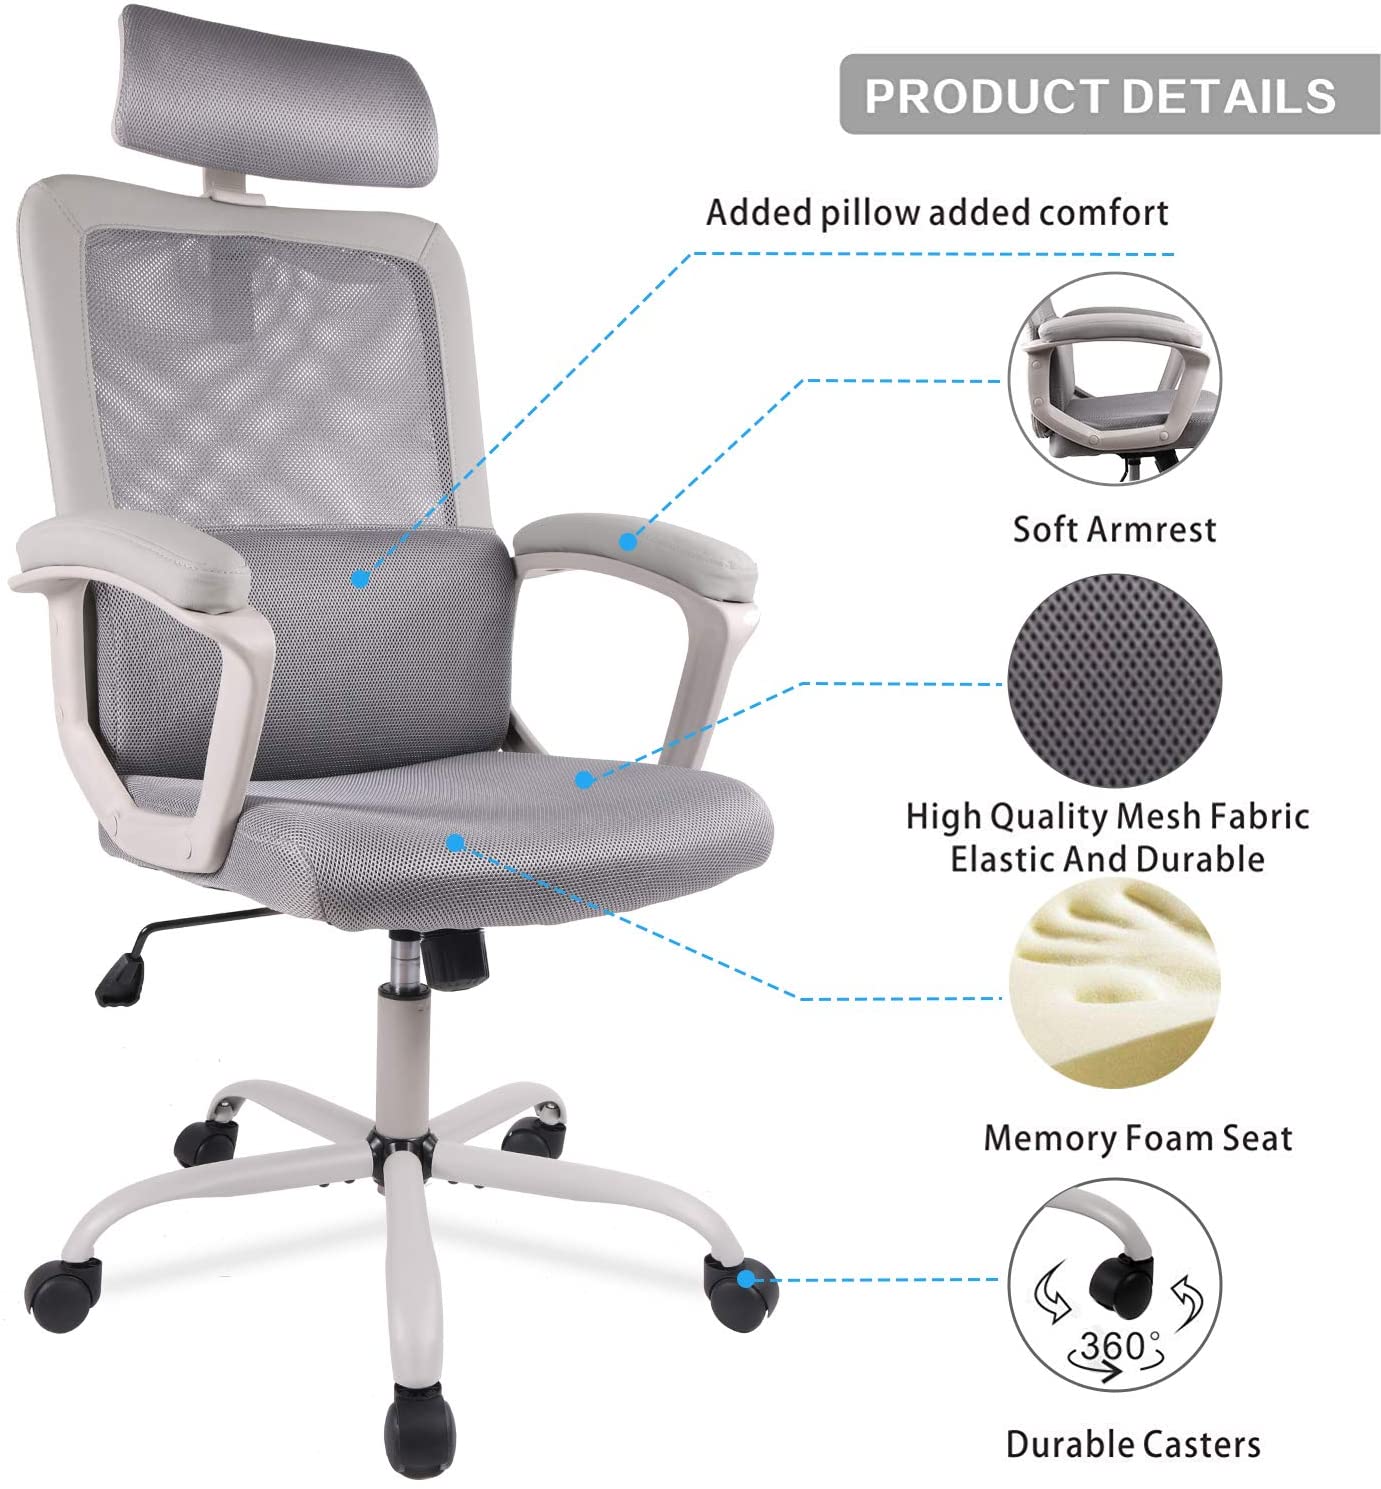 High Back Ergonomic Mesh Desk Office Chair with Padding Armrest and Adjustable Headrest